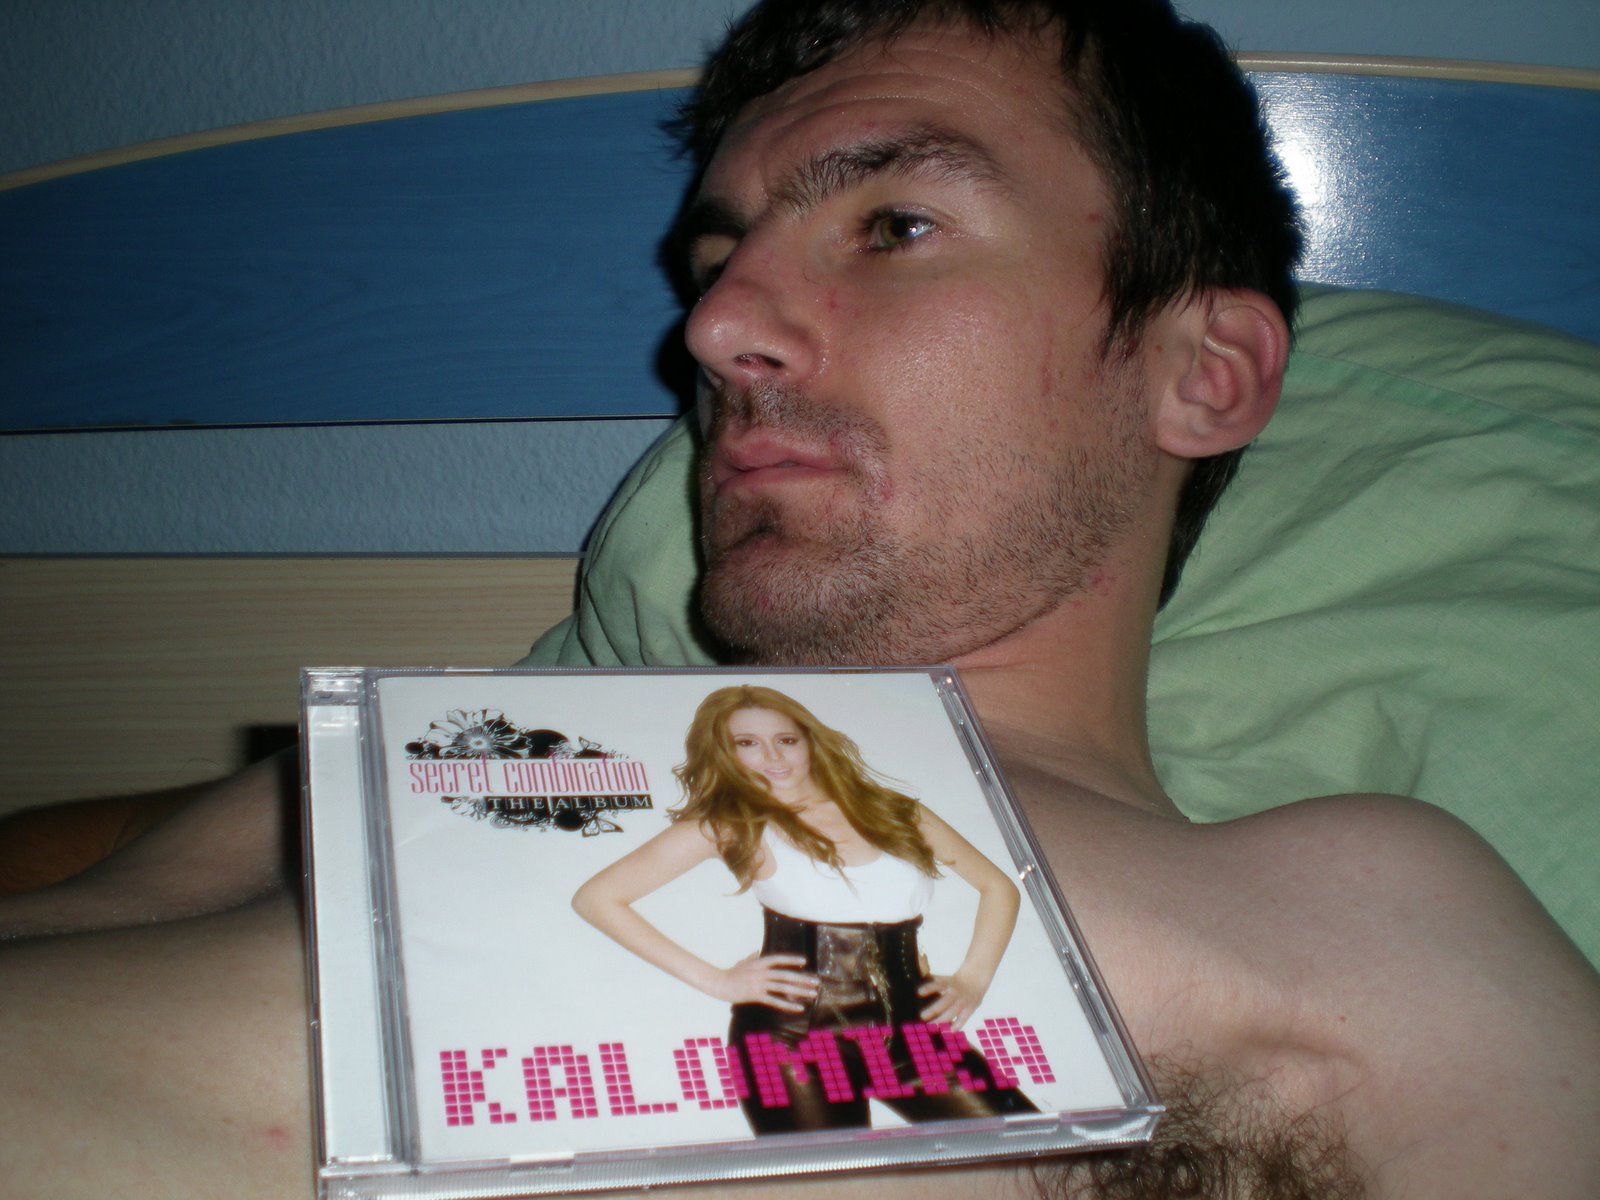 [kalomira+-+my+secret+combination+(the+album).JPG]